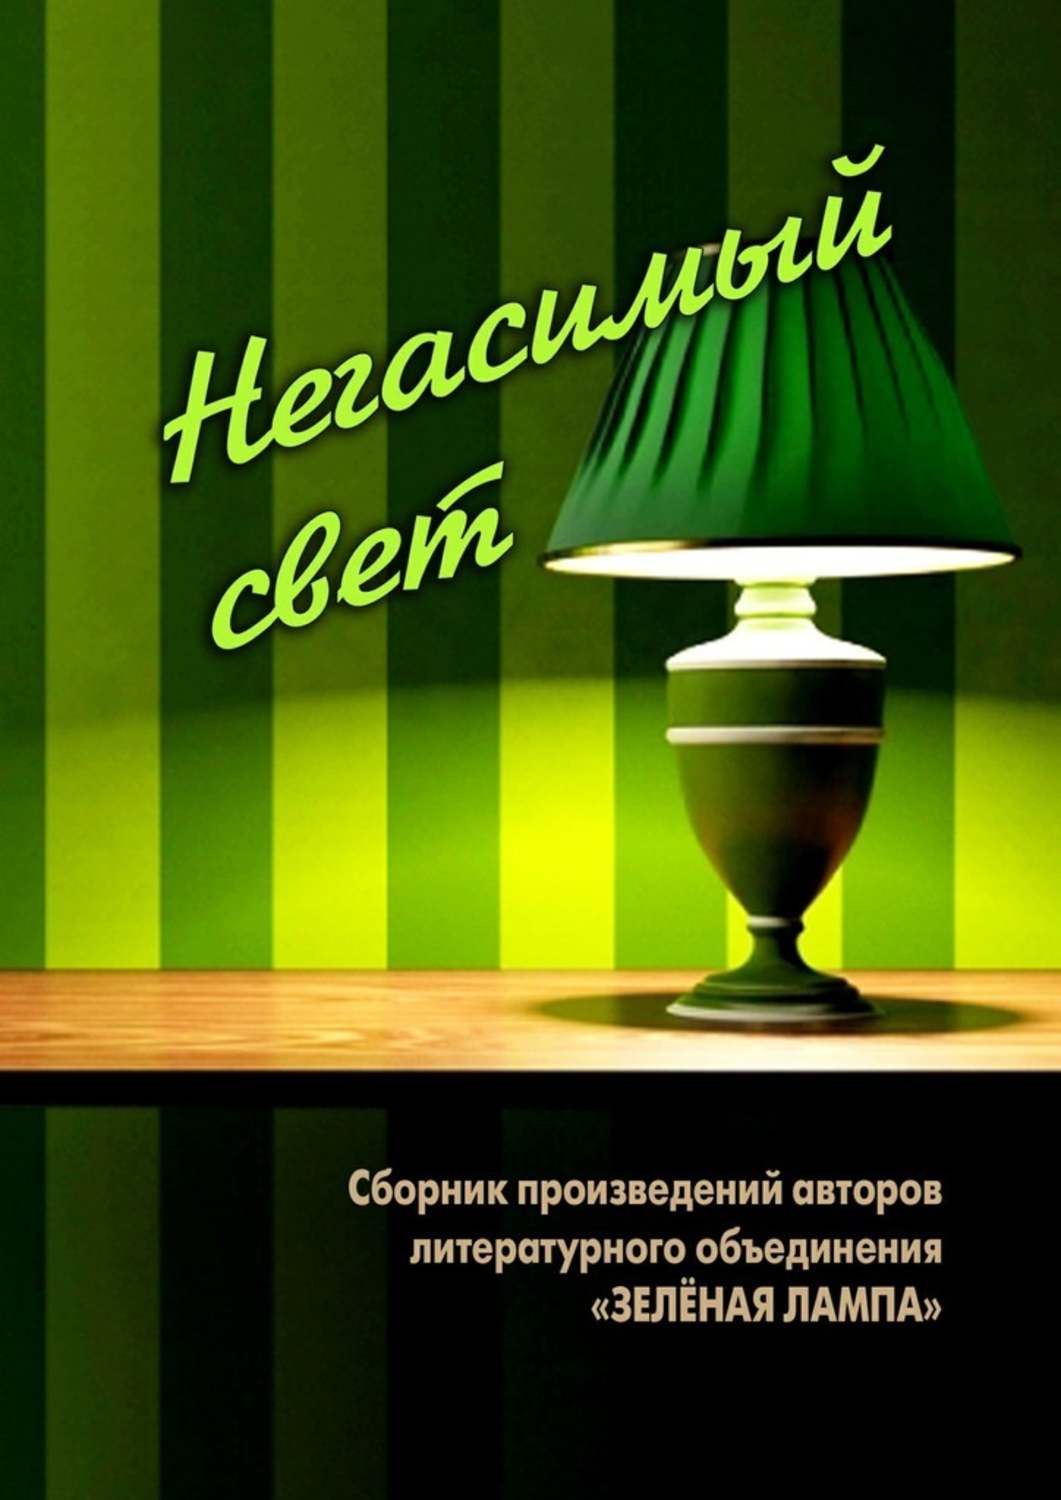 Сюжет рассказа зеленая лампа. Зелёная лампа Грин. Грин зеленая лампа книга. Литературное объединение зеленая лампа.